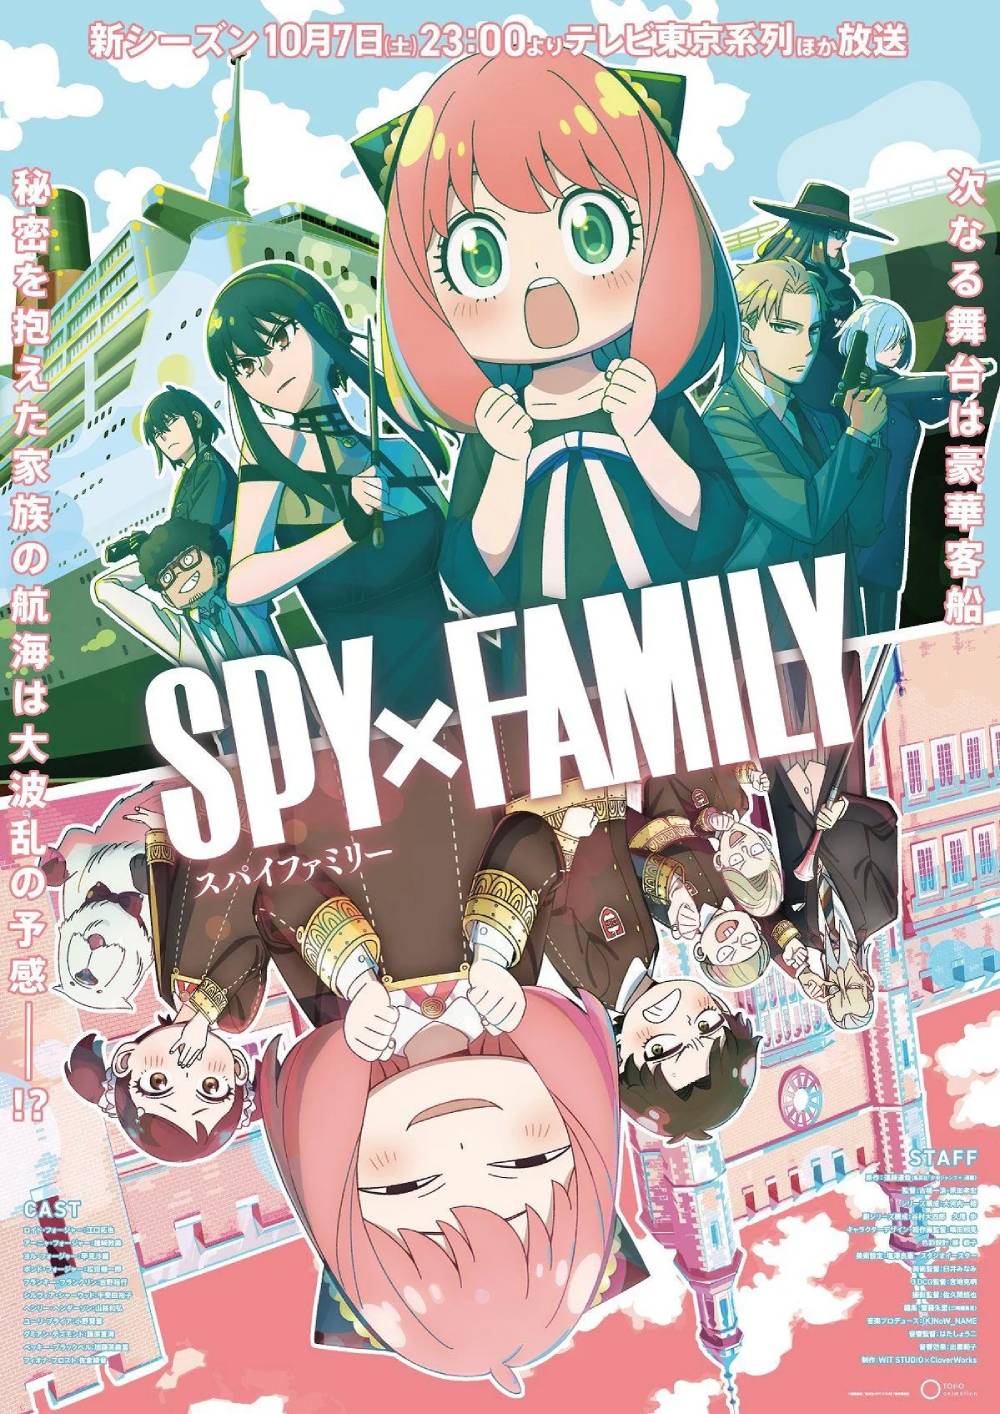 Spy×Family Anime 2nd Season